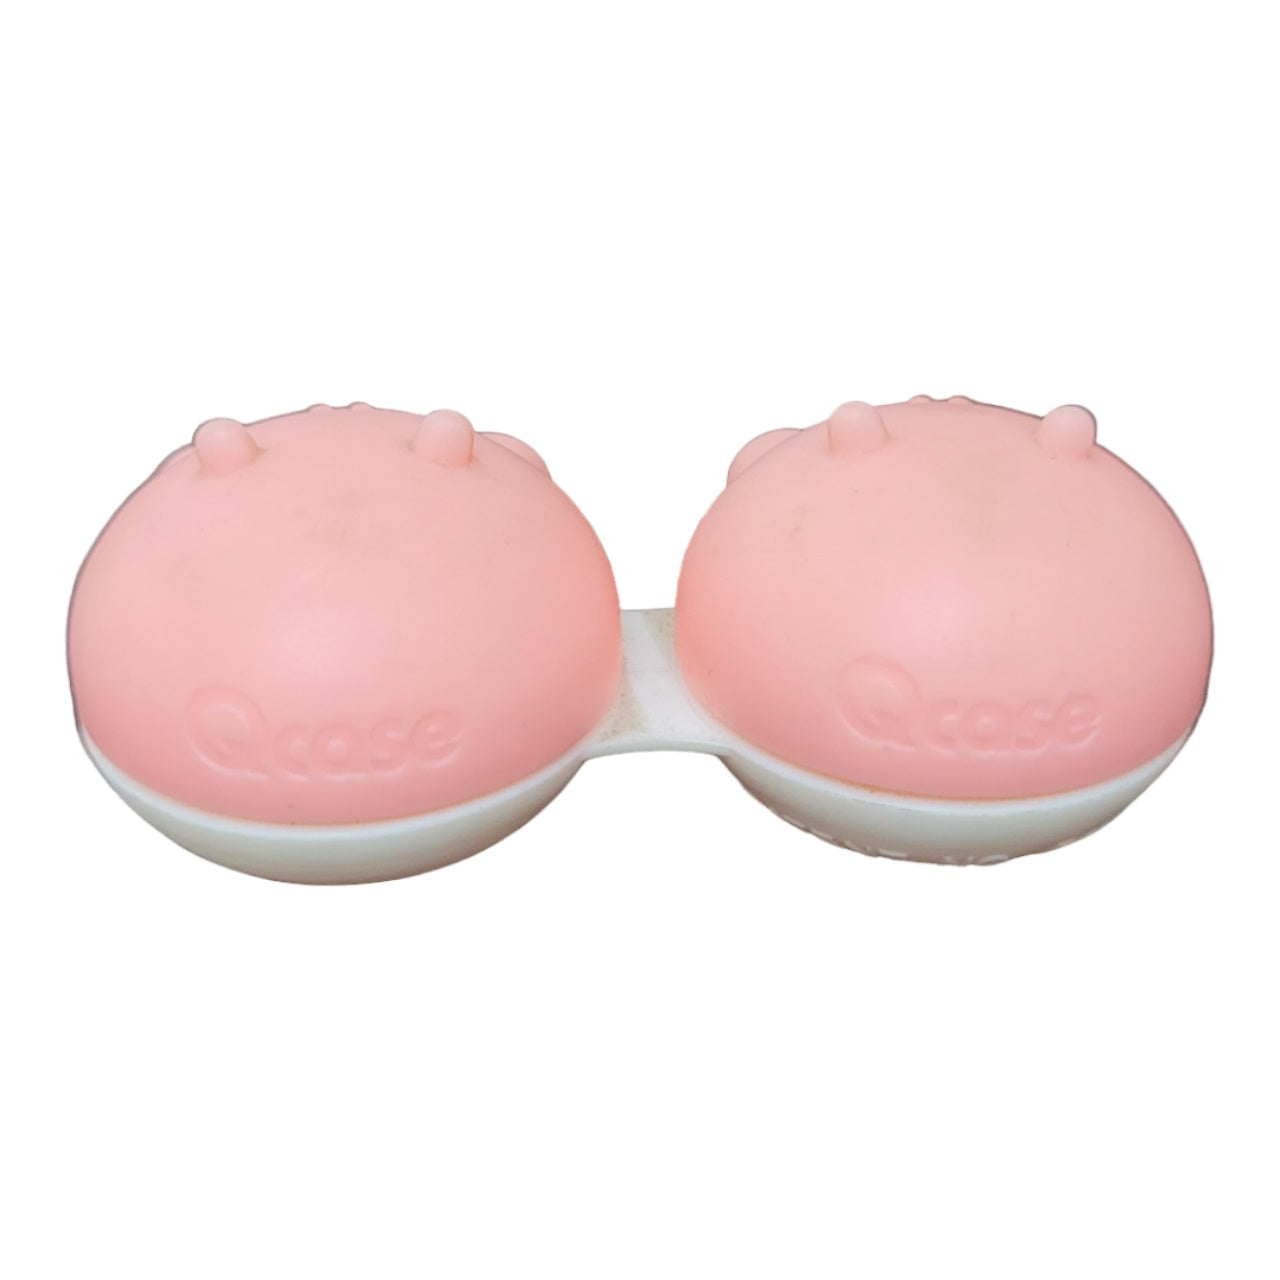 Hippo Contact Lens Case | Fancy Contact Lenses Case Pink Color by Affaires Qcase-0048